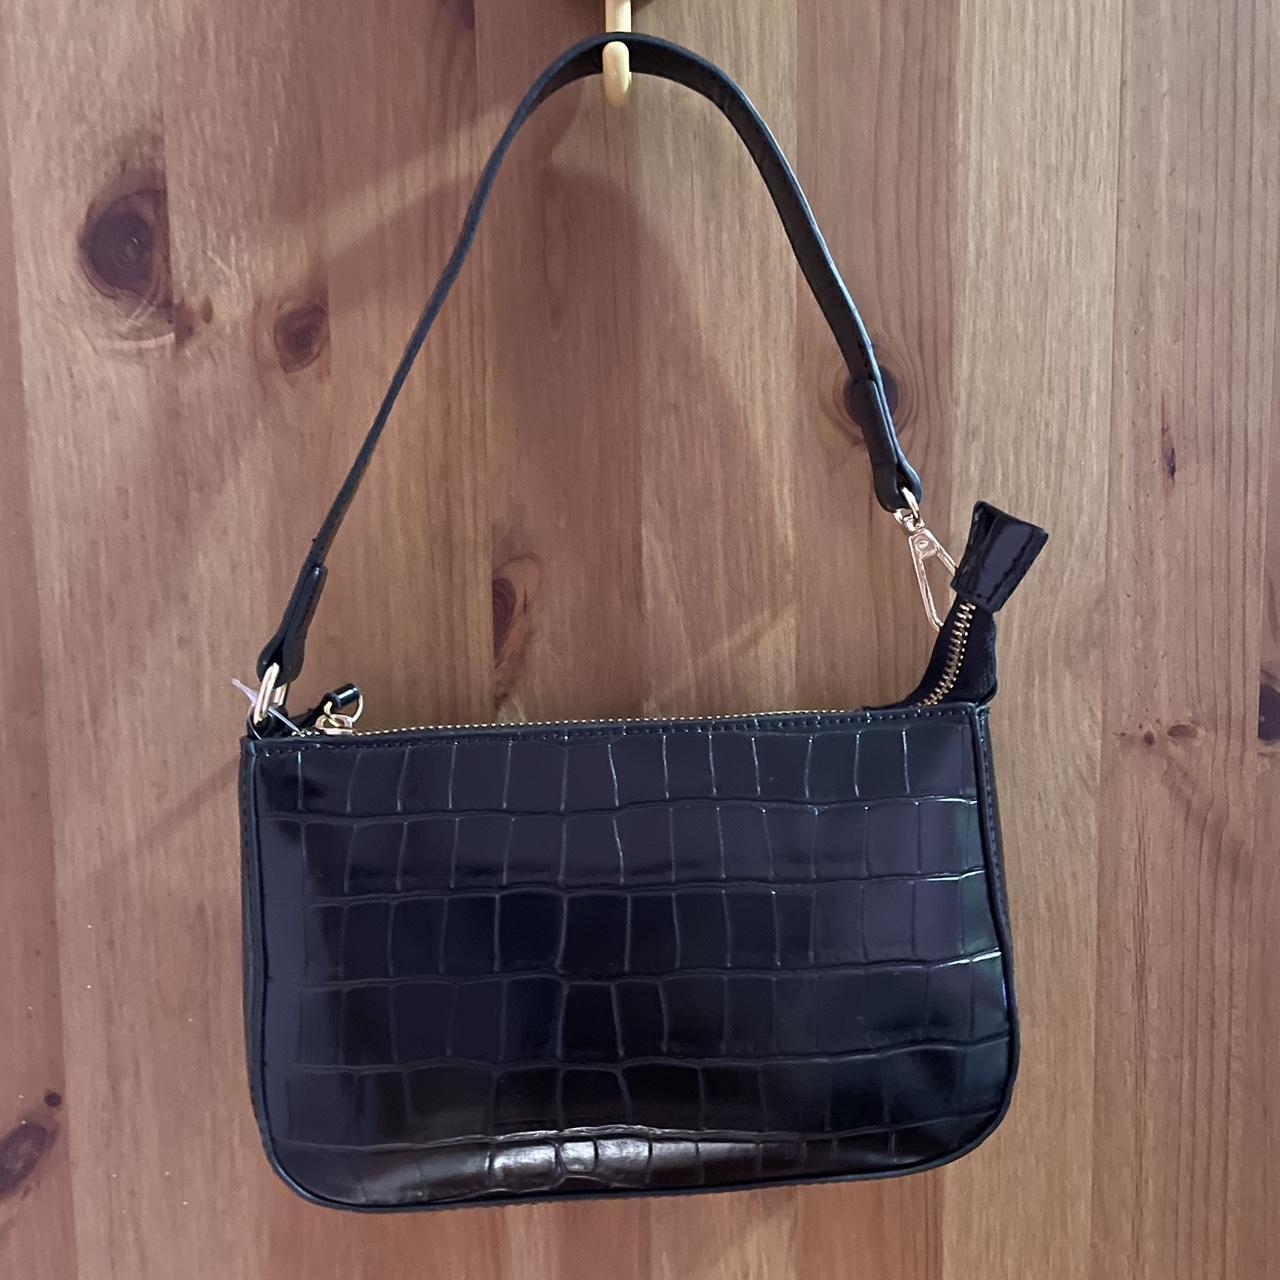 Liz Claiborne Classy Light Brown Faux Croc Handbag Satchel Purse with  Tassles* | eBay